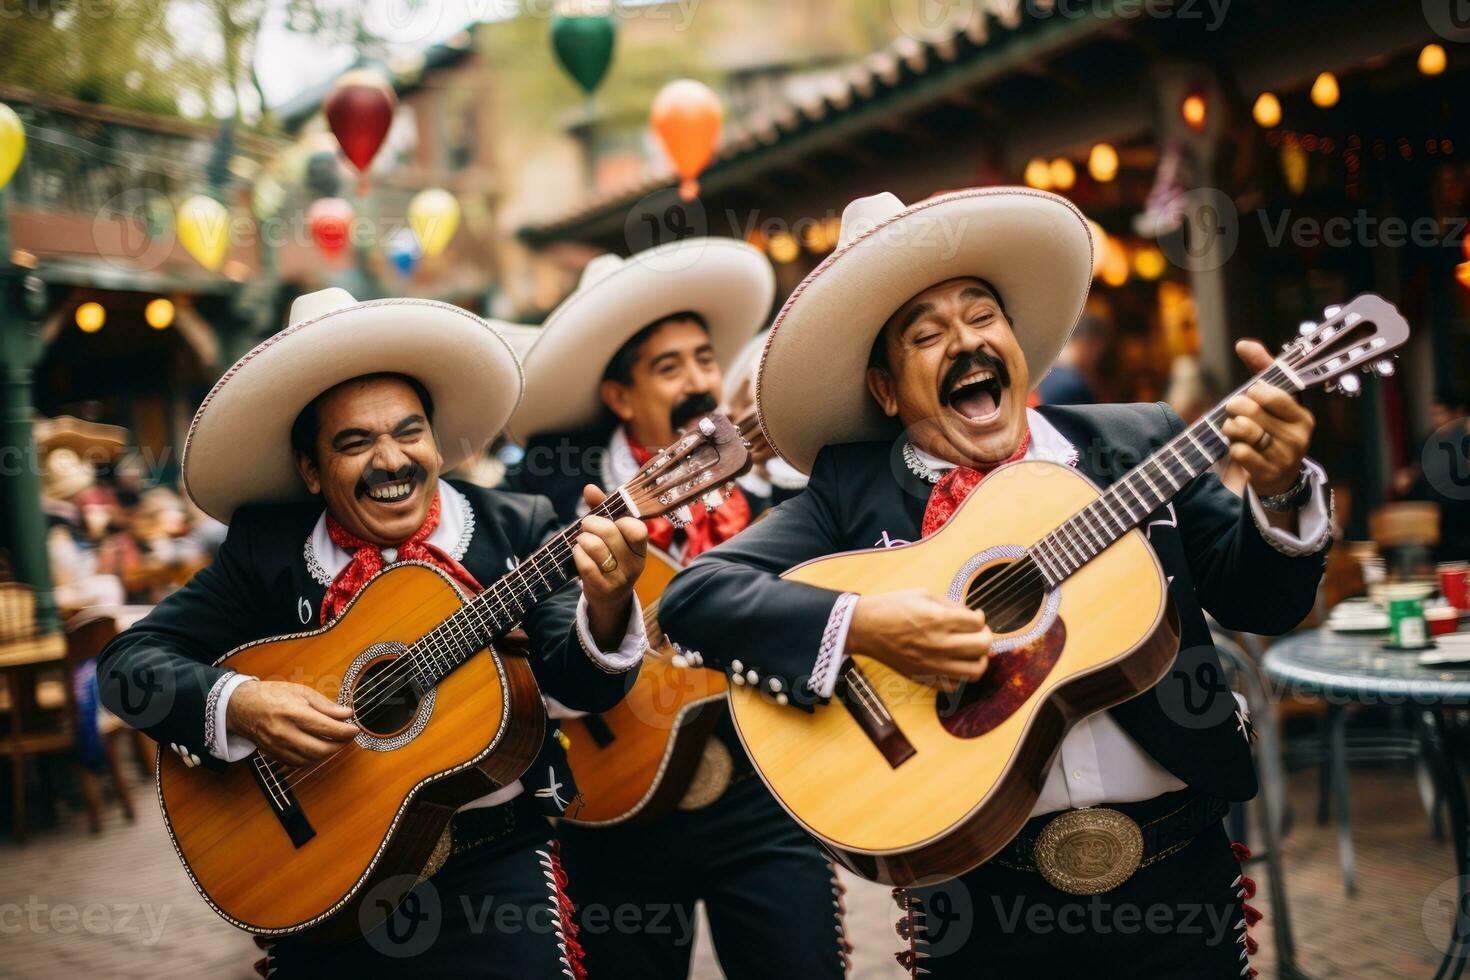 ai generado festival tradicion celebracion Mariachi músico sombrero mexico hombres mexicano personas divertido foto